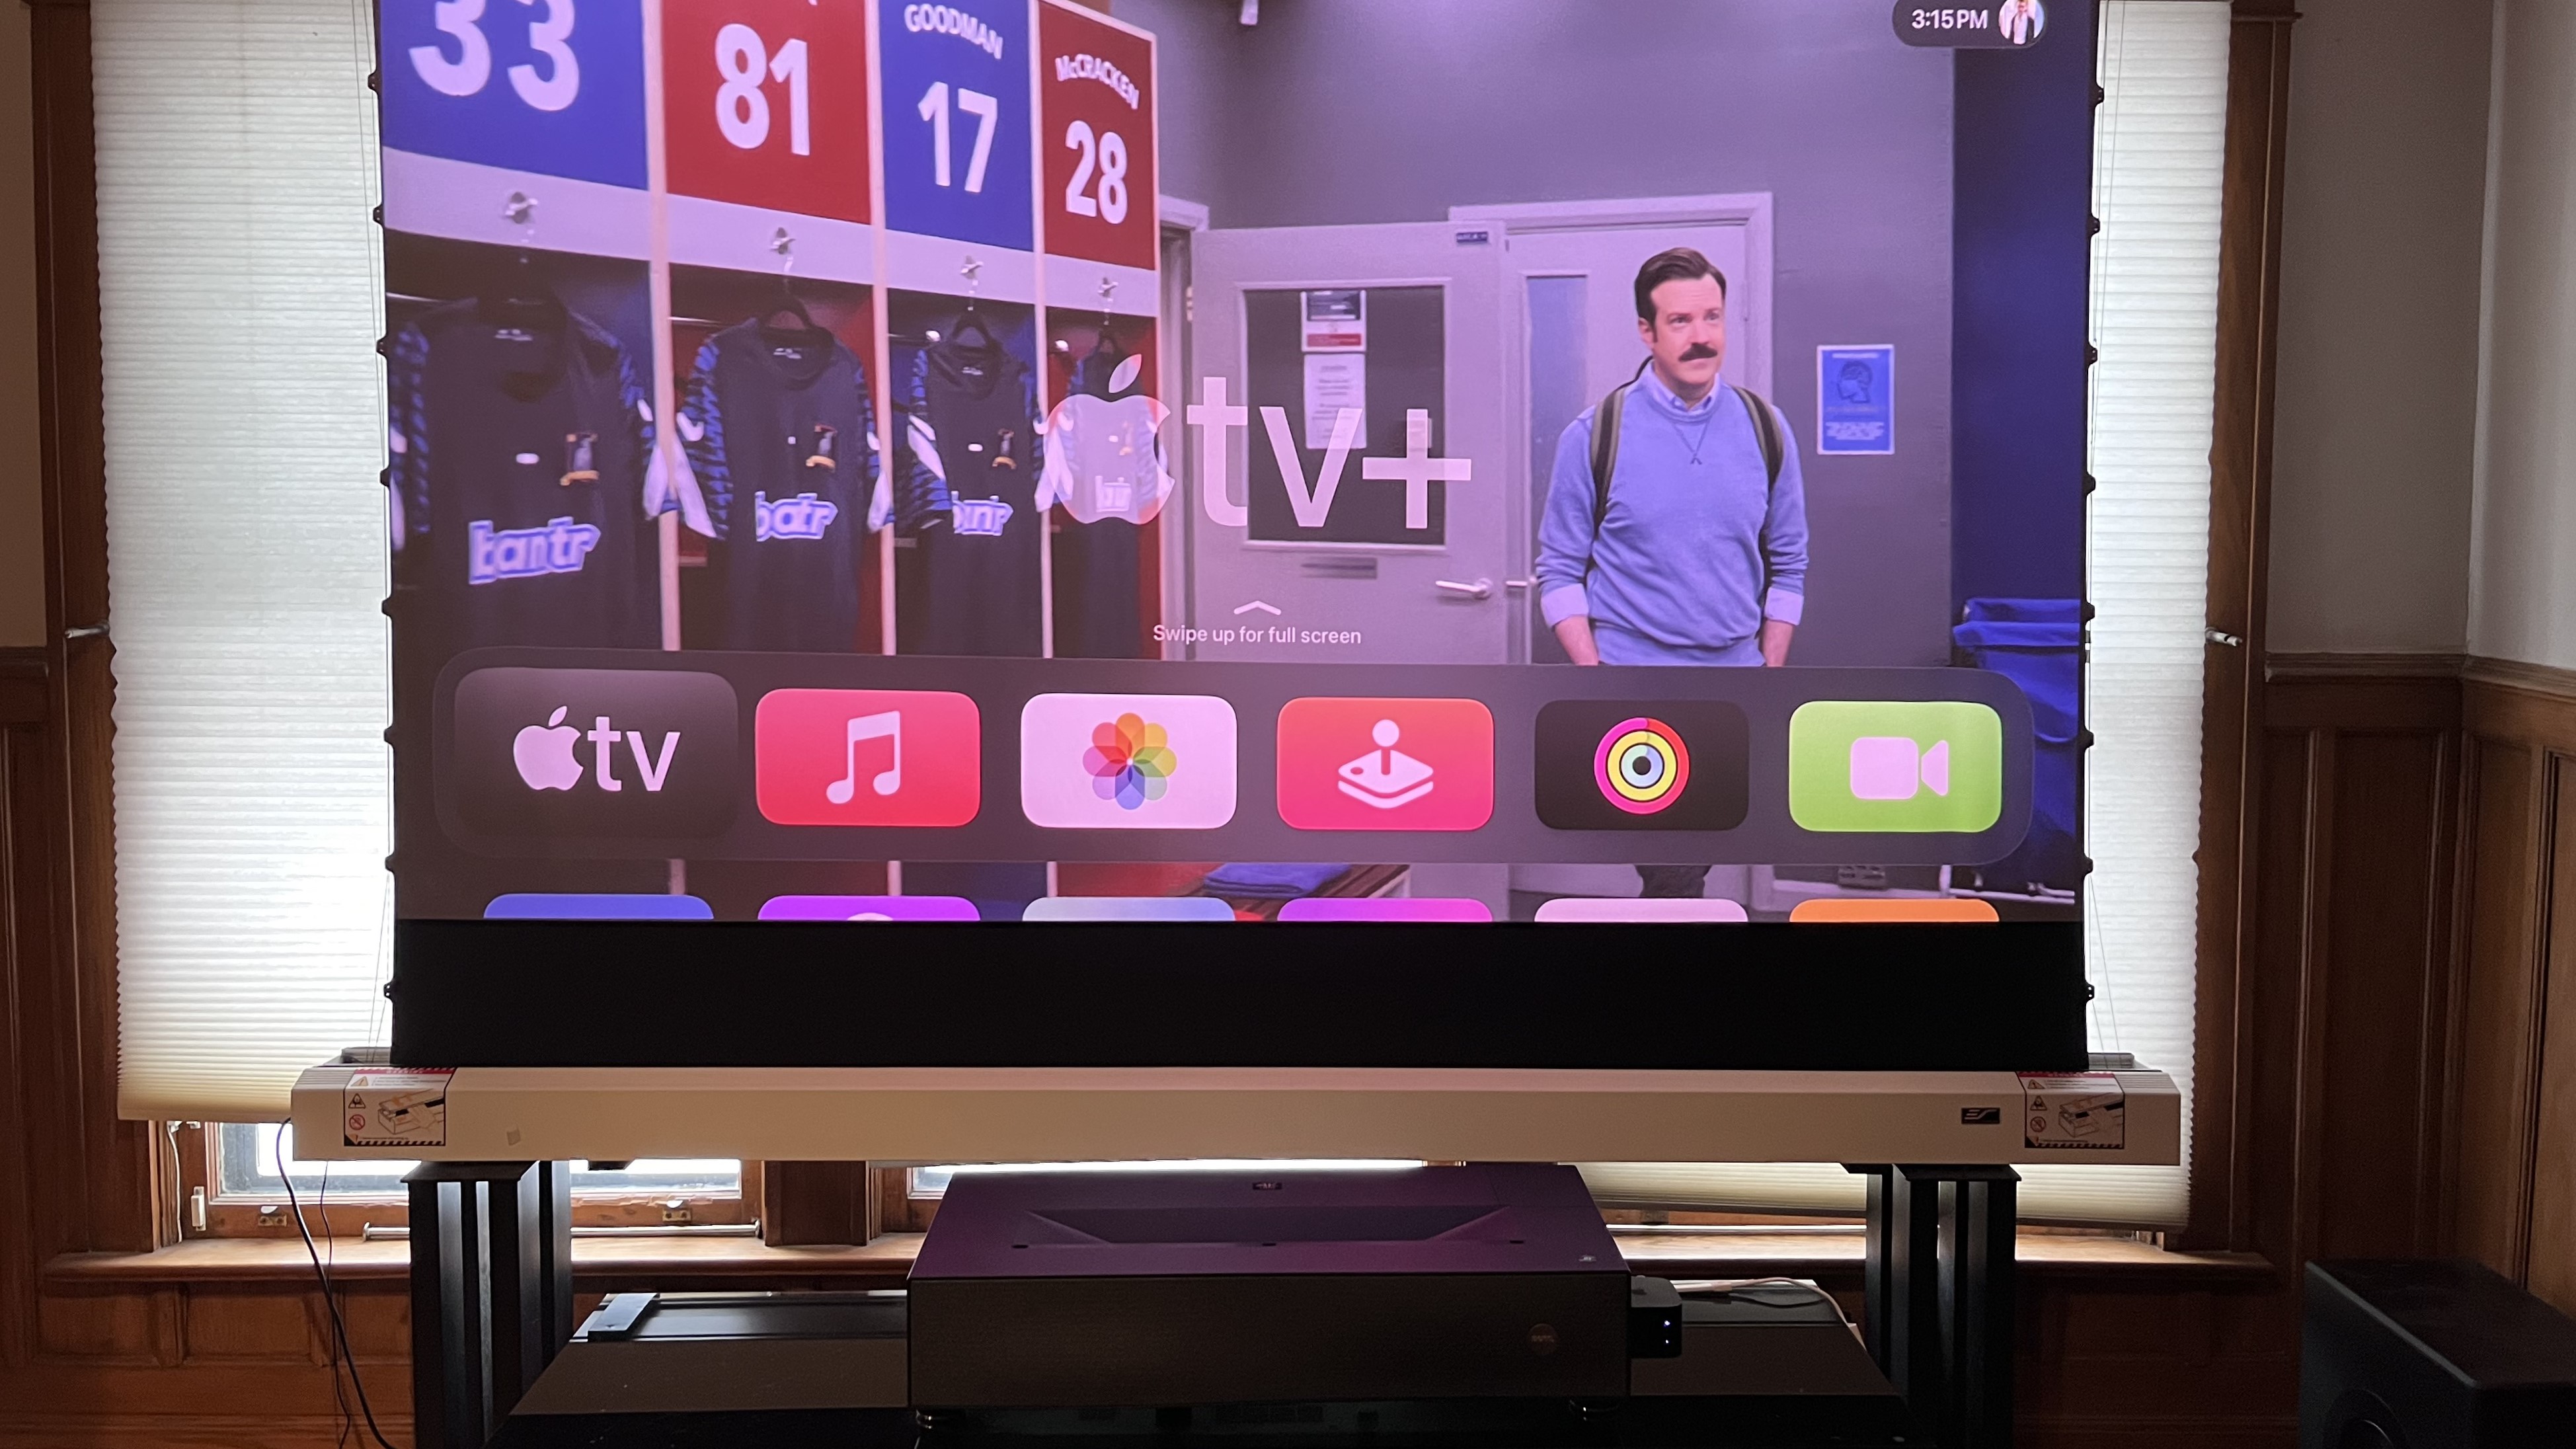 BenQ v5000i projector showing Apple TV interface